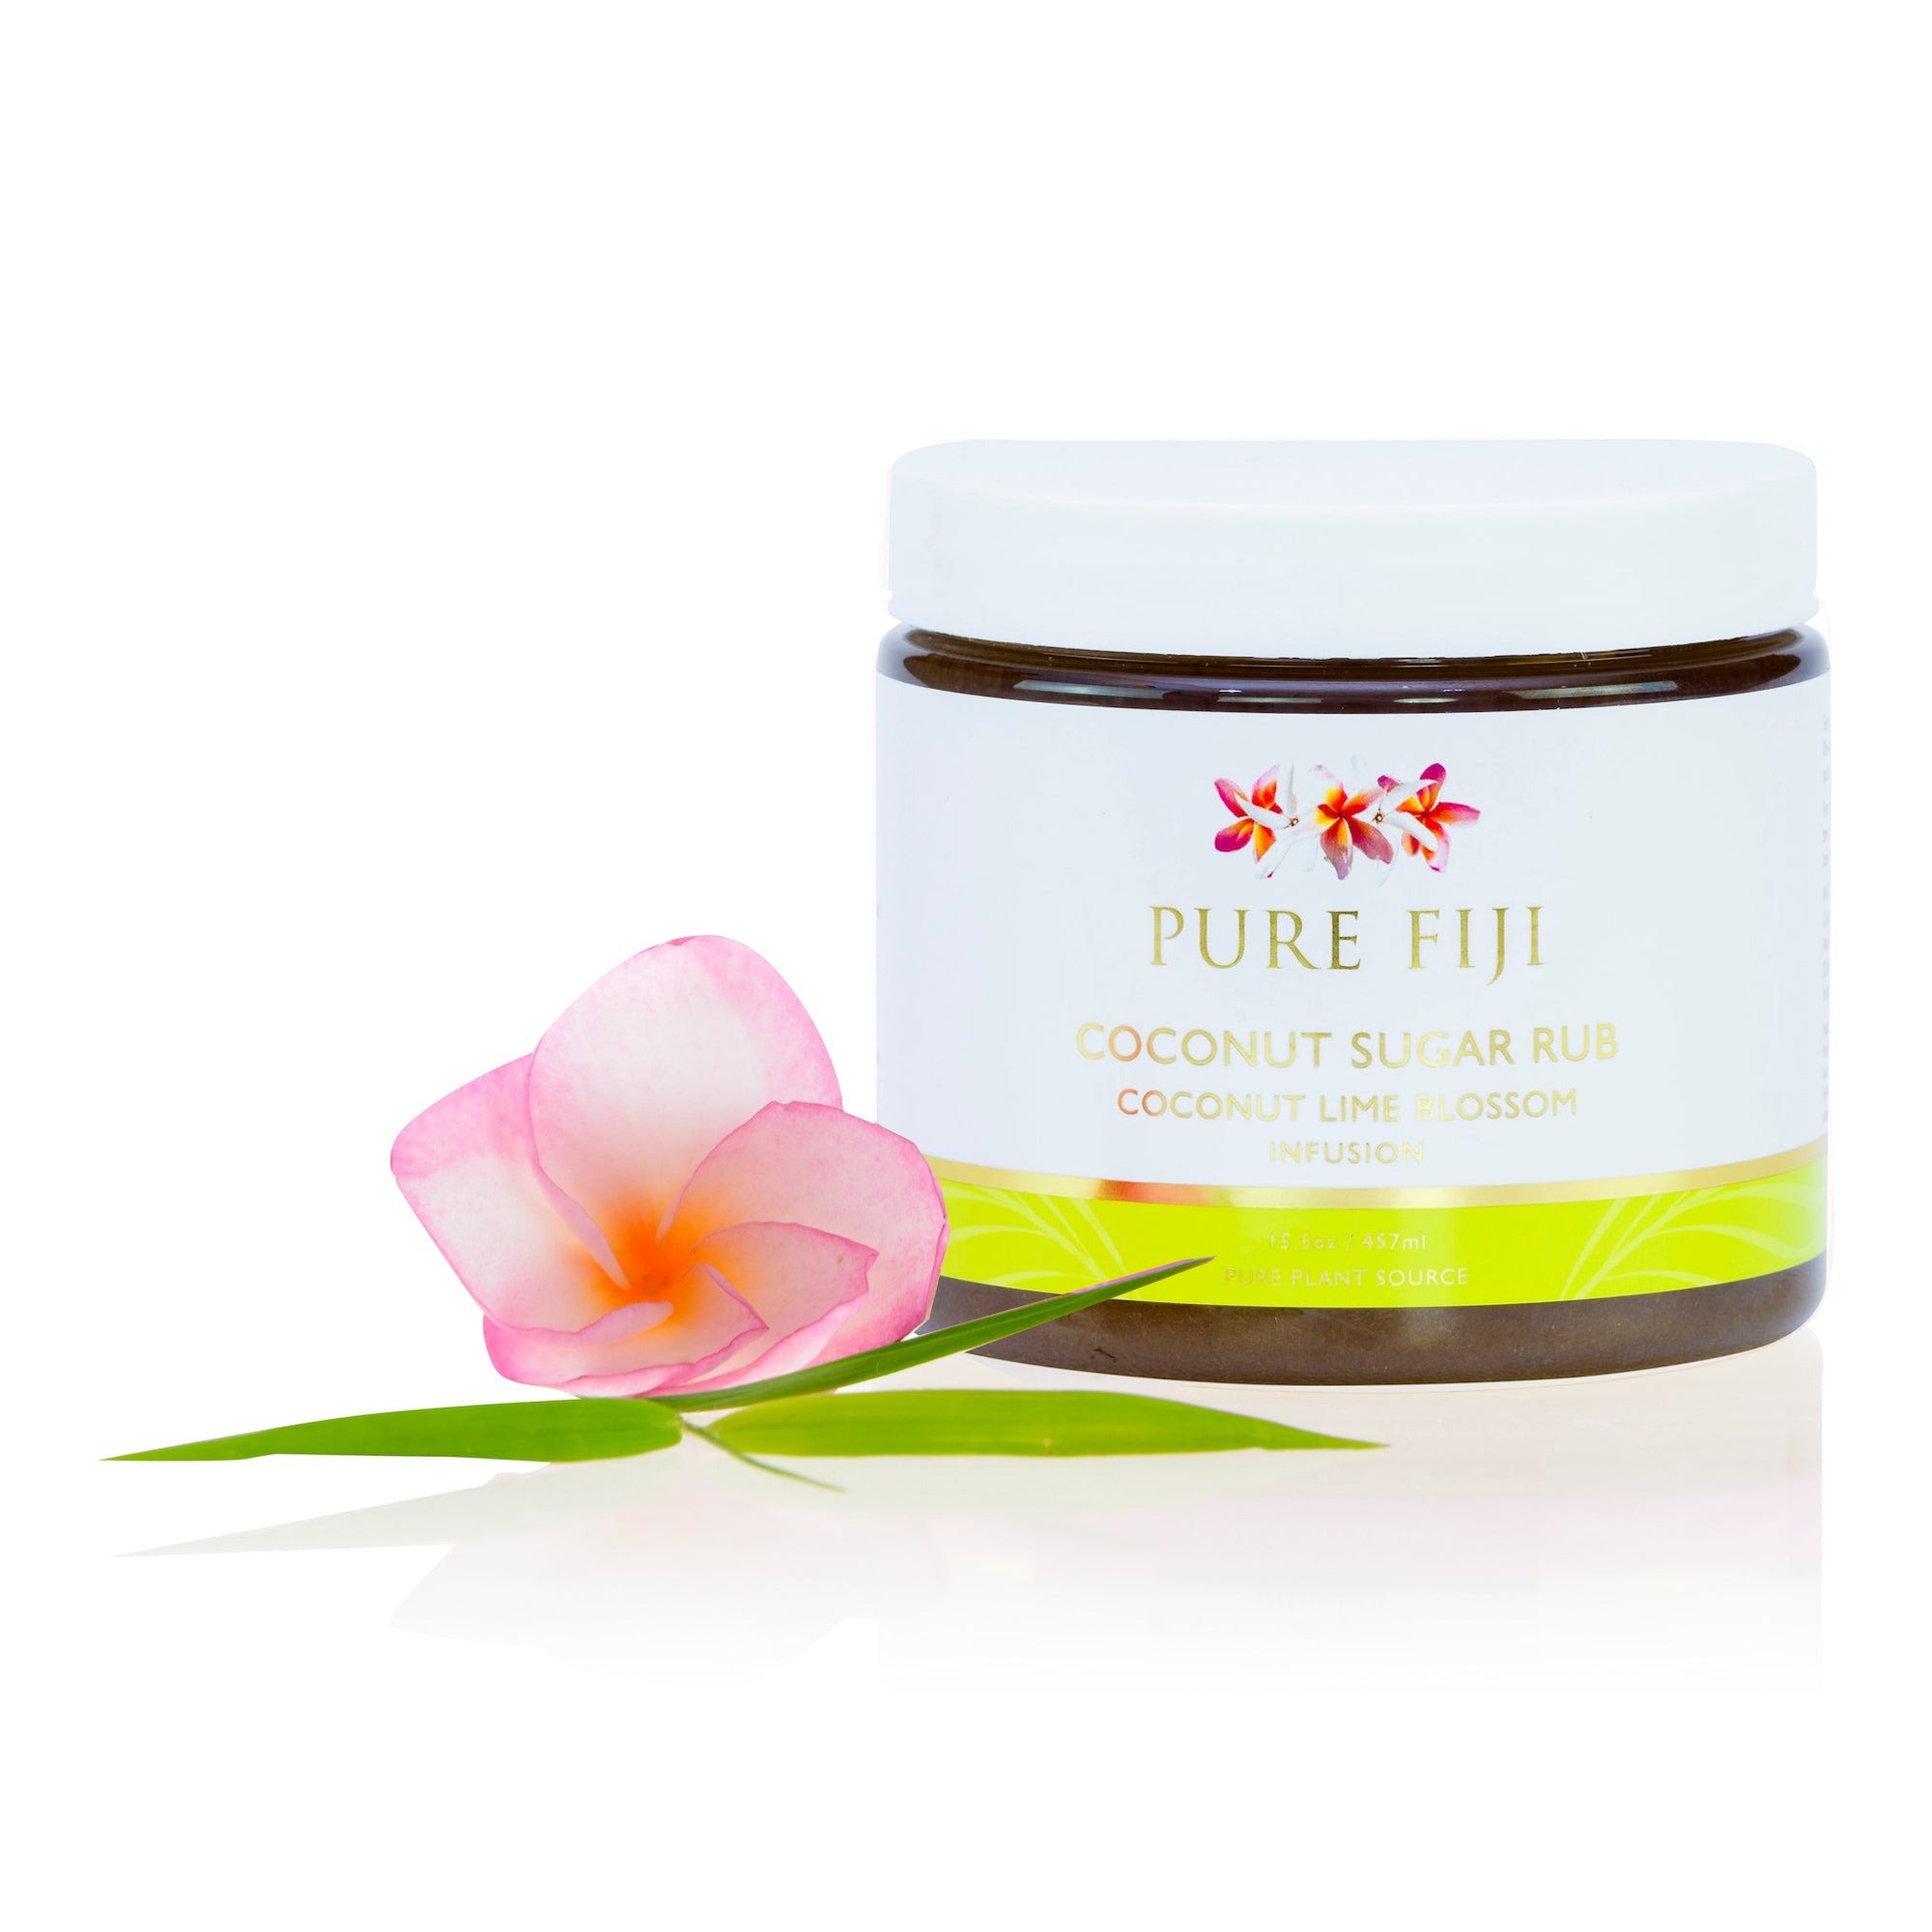 Pure Fiji Coconut Sugar Rub - Coconut Lime Blossom 15oz